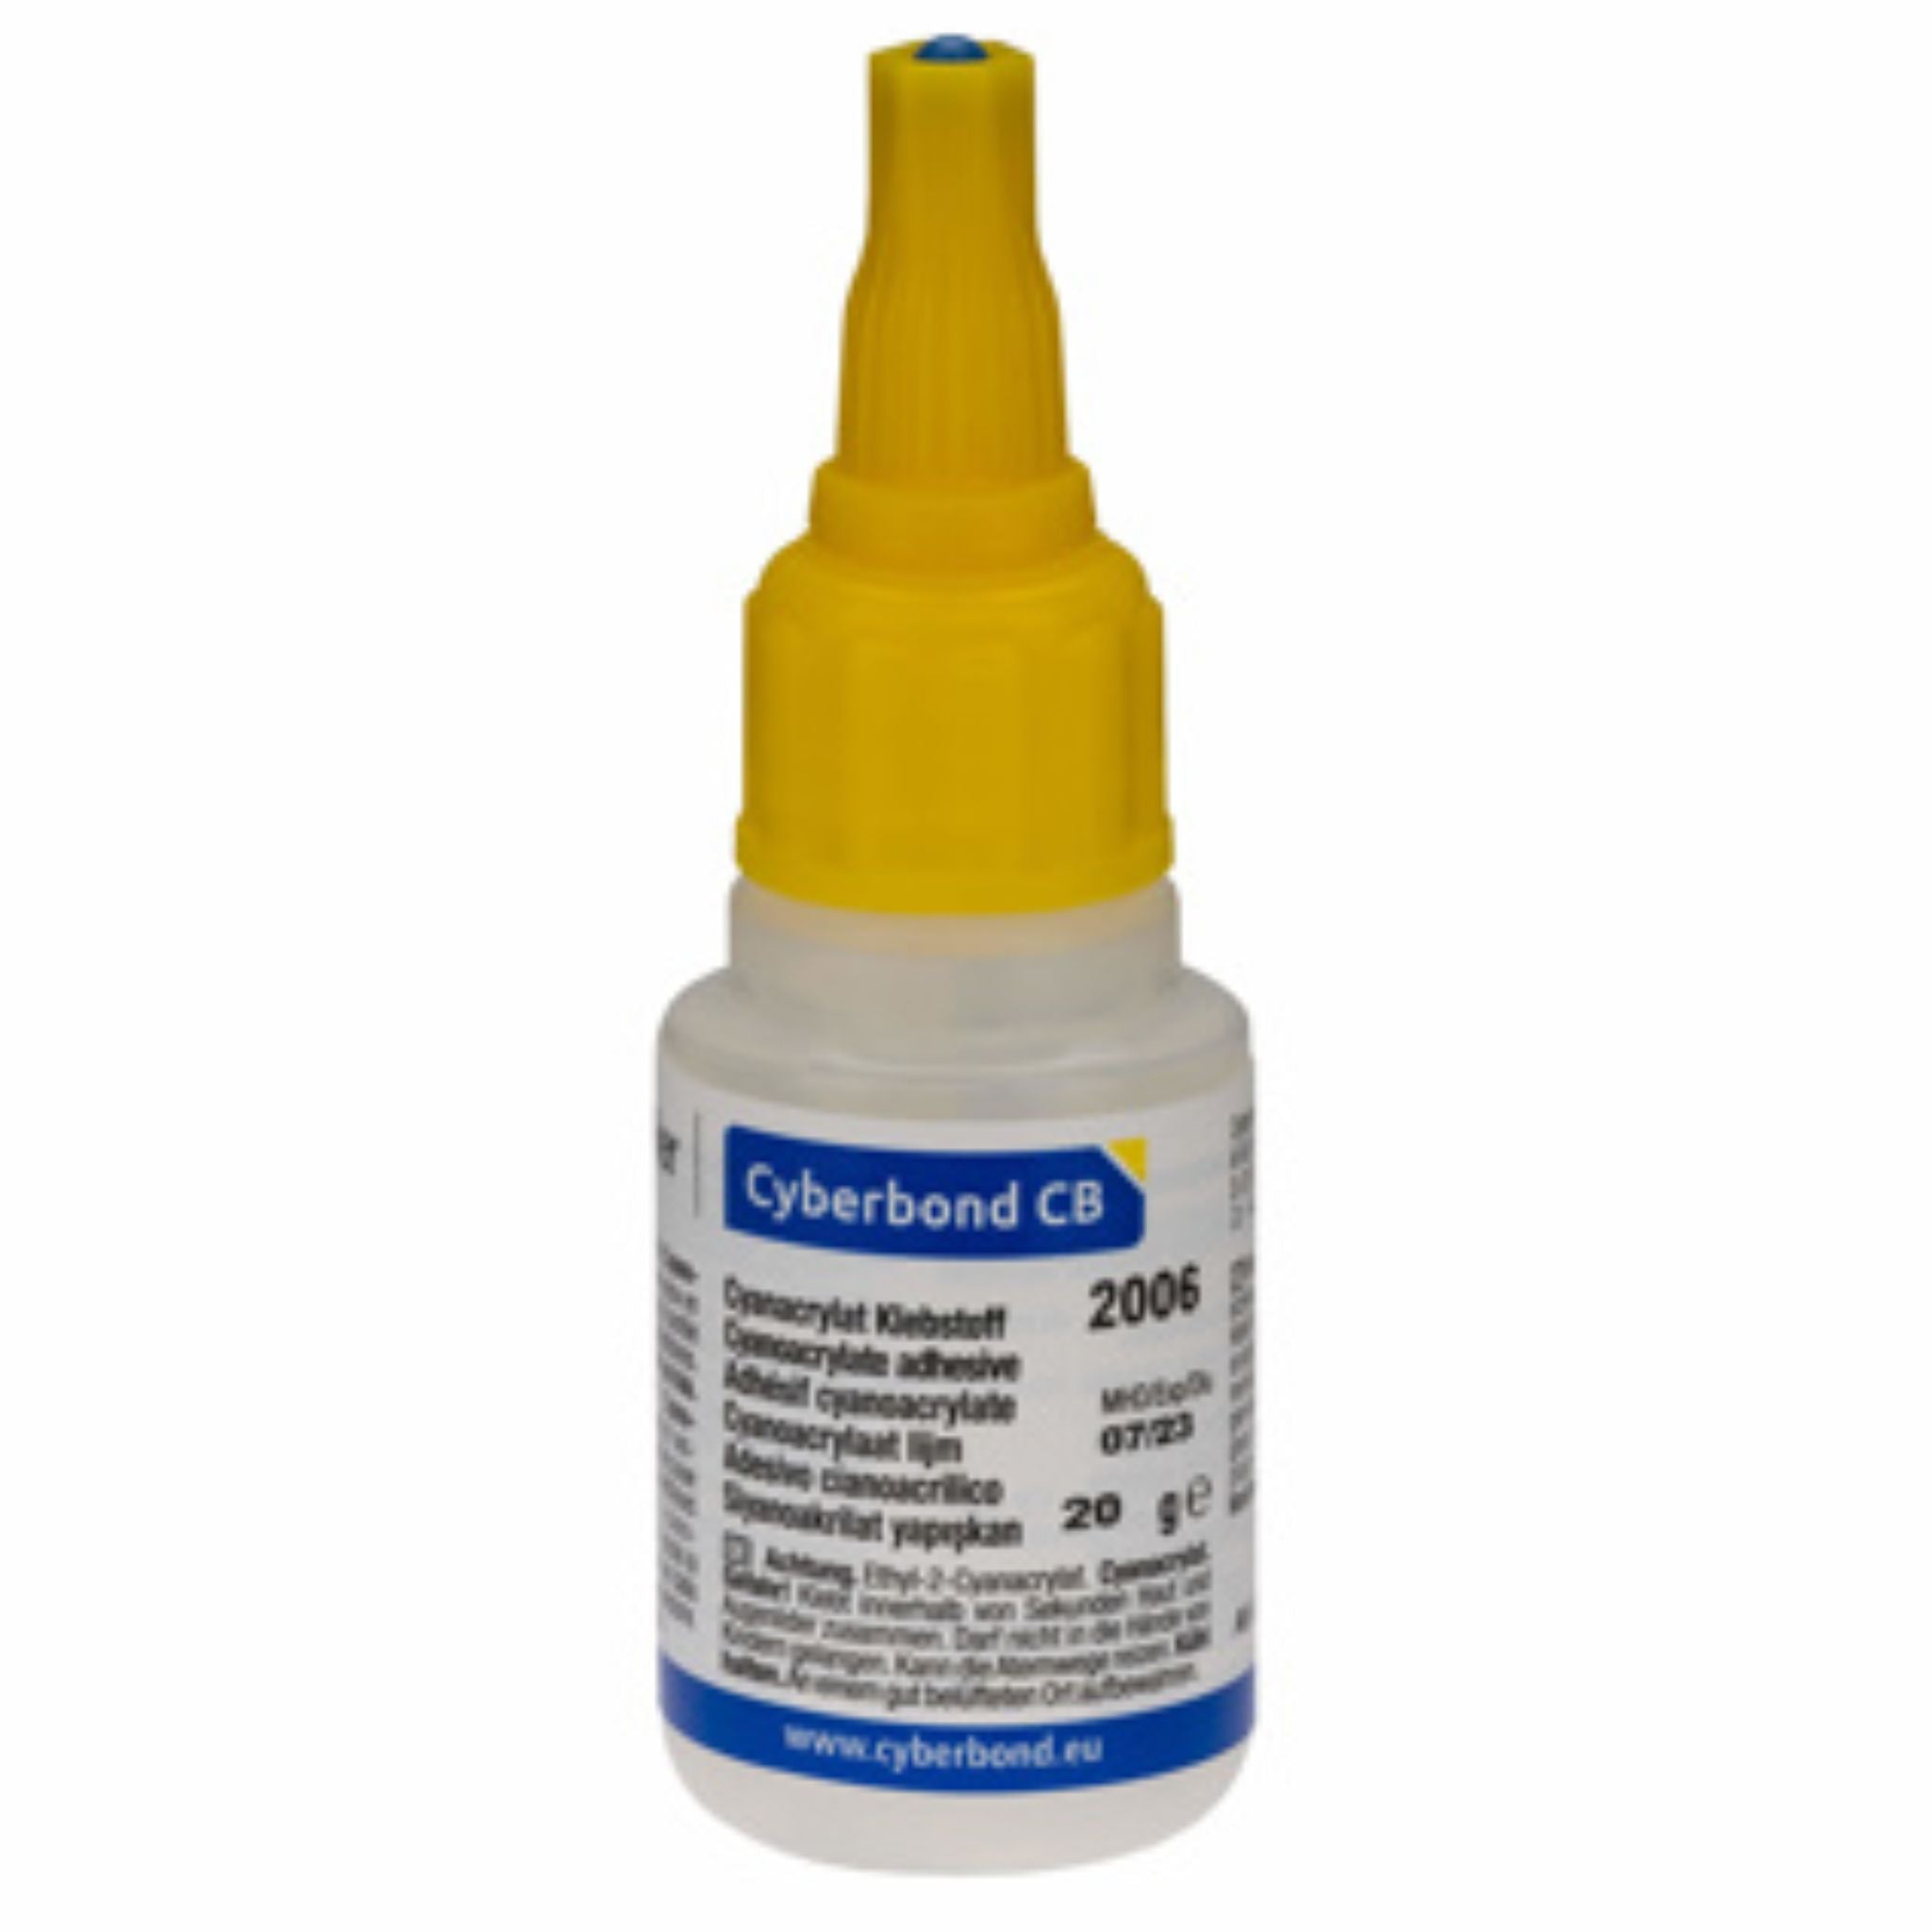 Cyberbond cyanoacrylate adhesive - 0